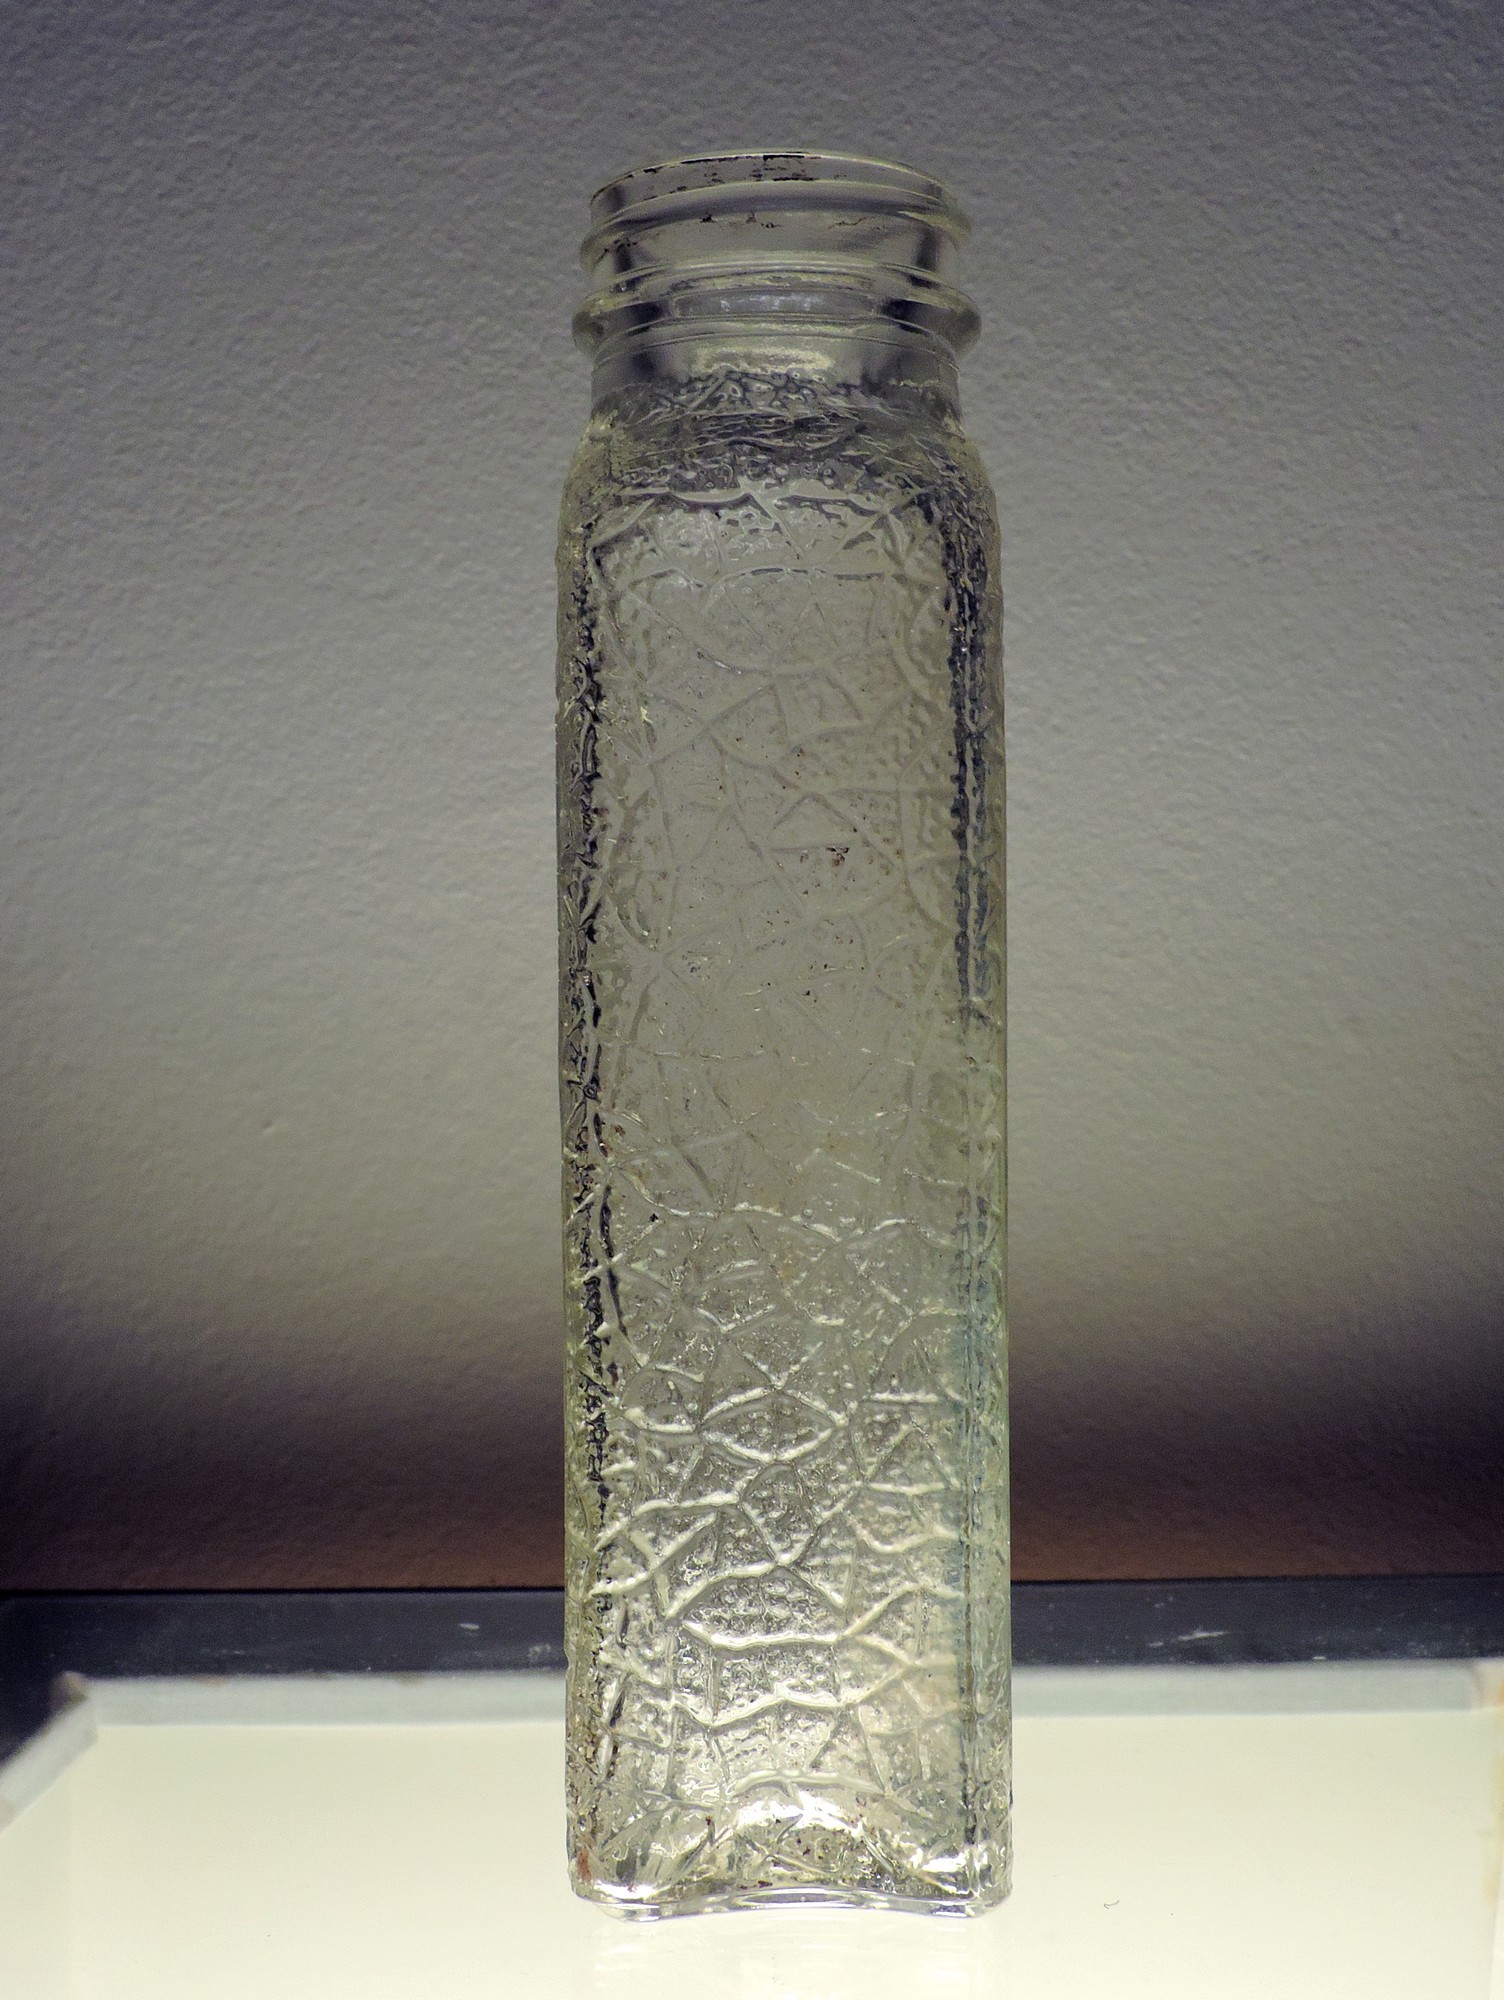 1930's Dr. Ellis Waveset Bottle (6)